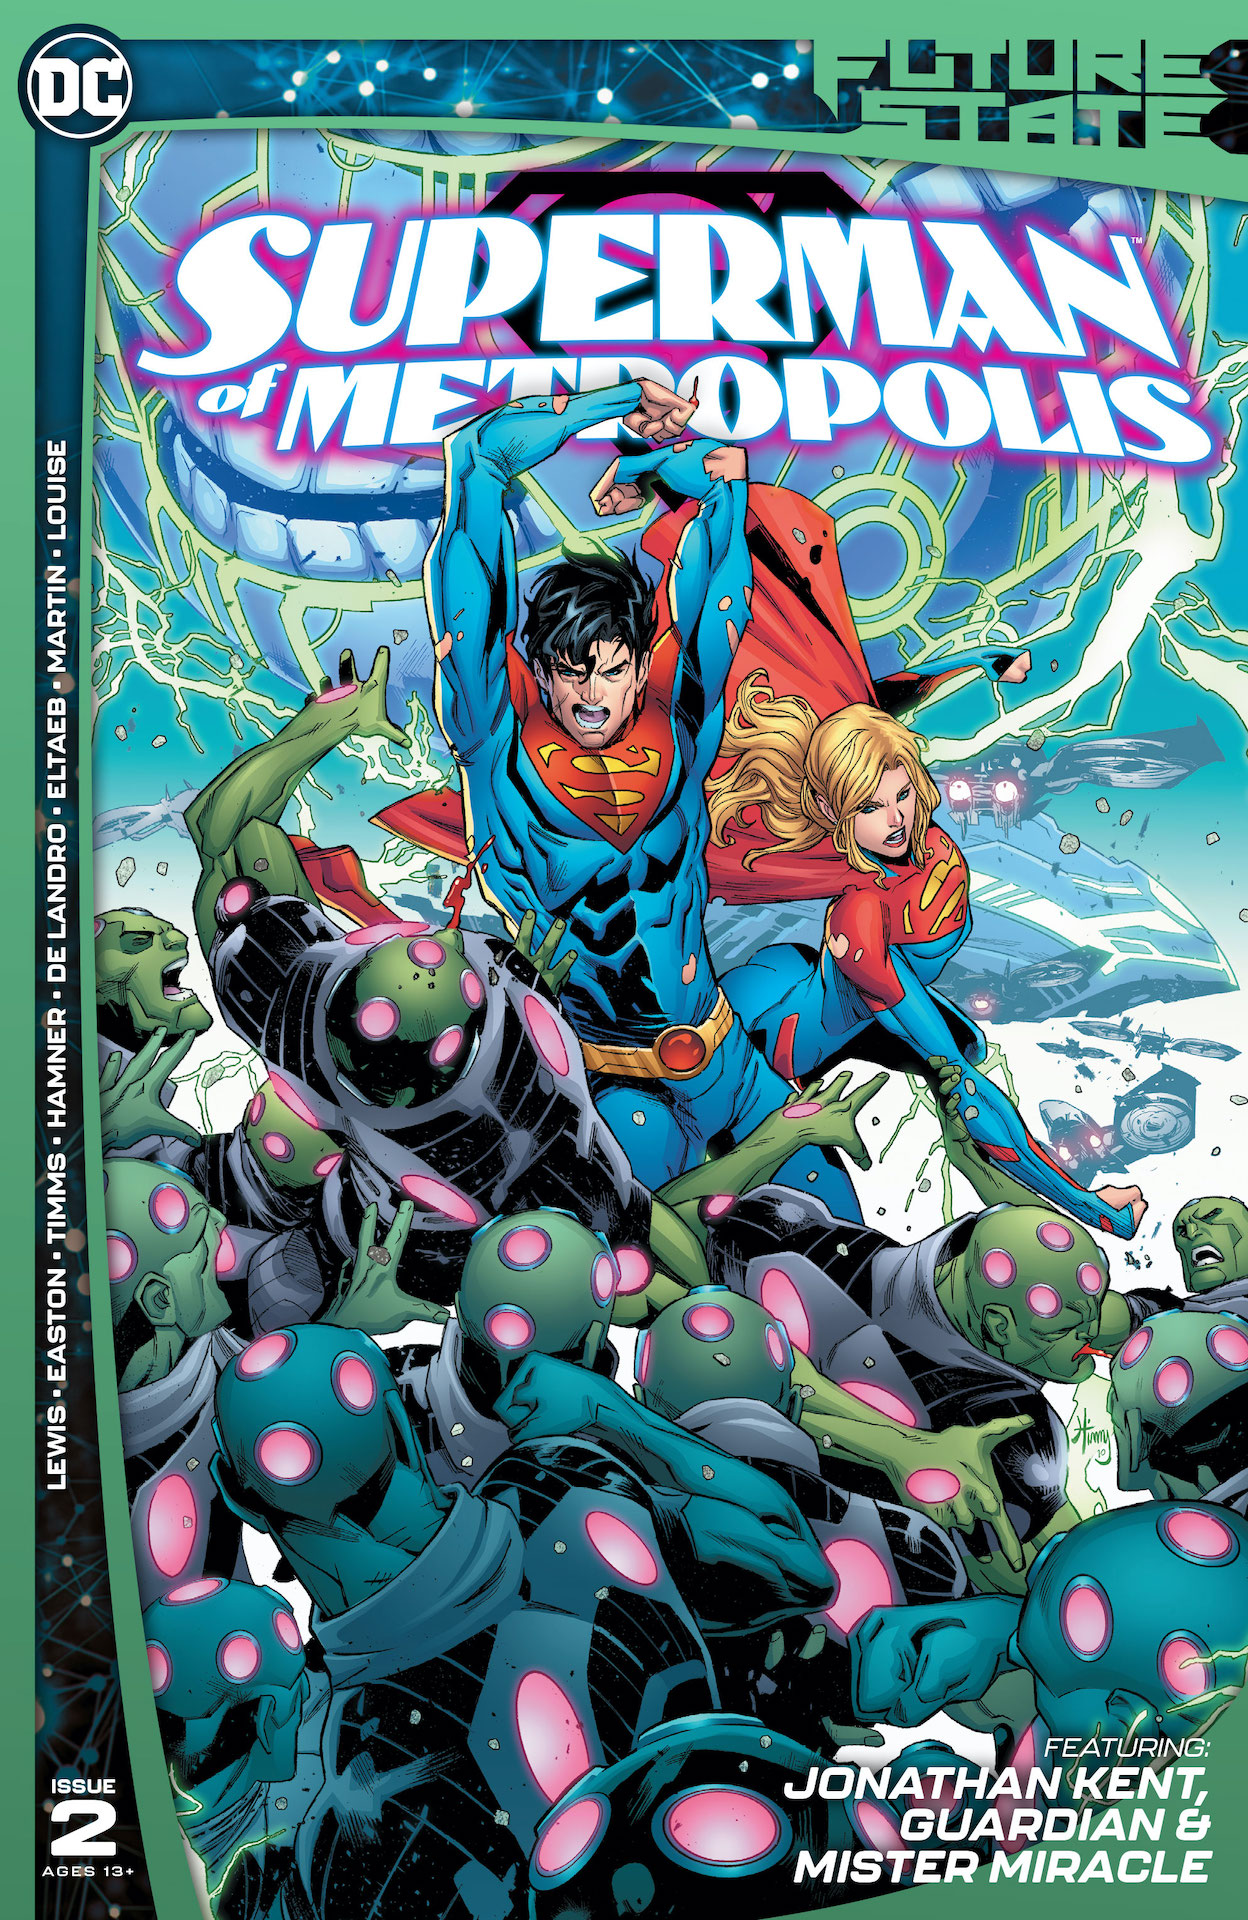 DC Preview: Future State: Superman of Metropolis #2